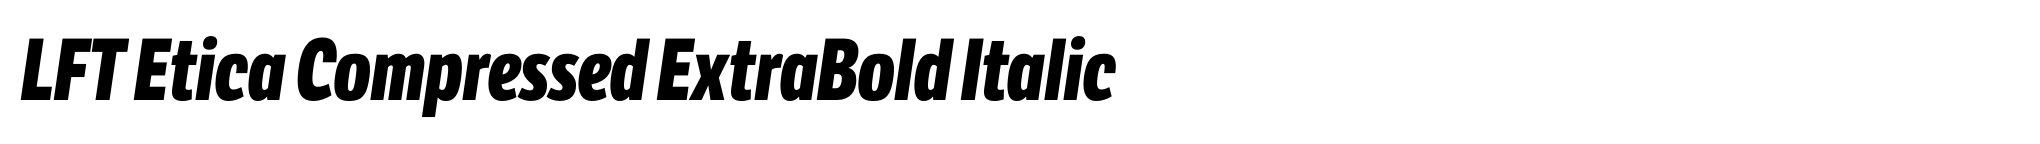 LFT Etica Compressed ExtraBold Italic image